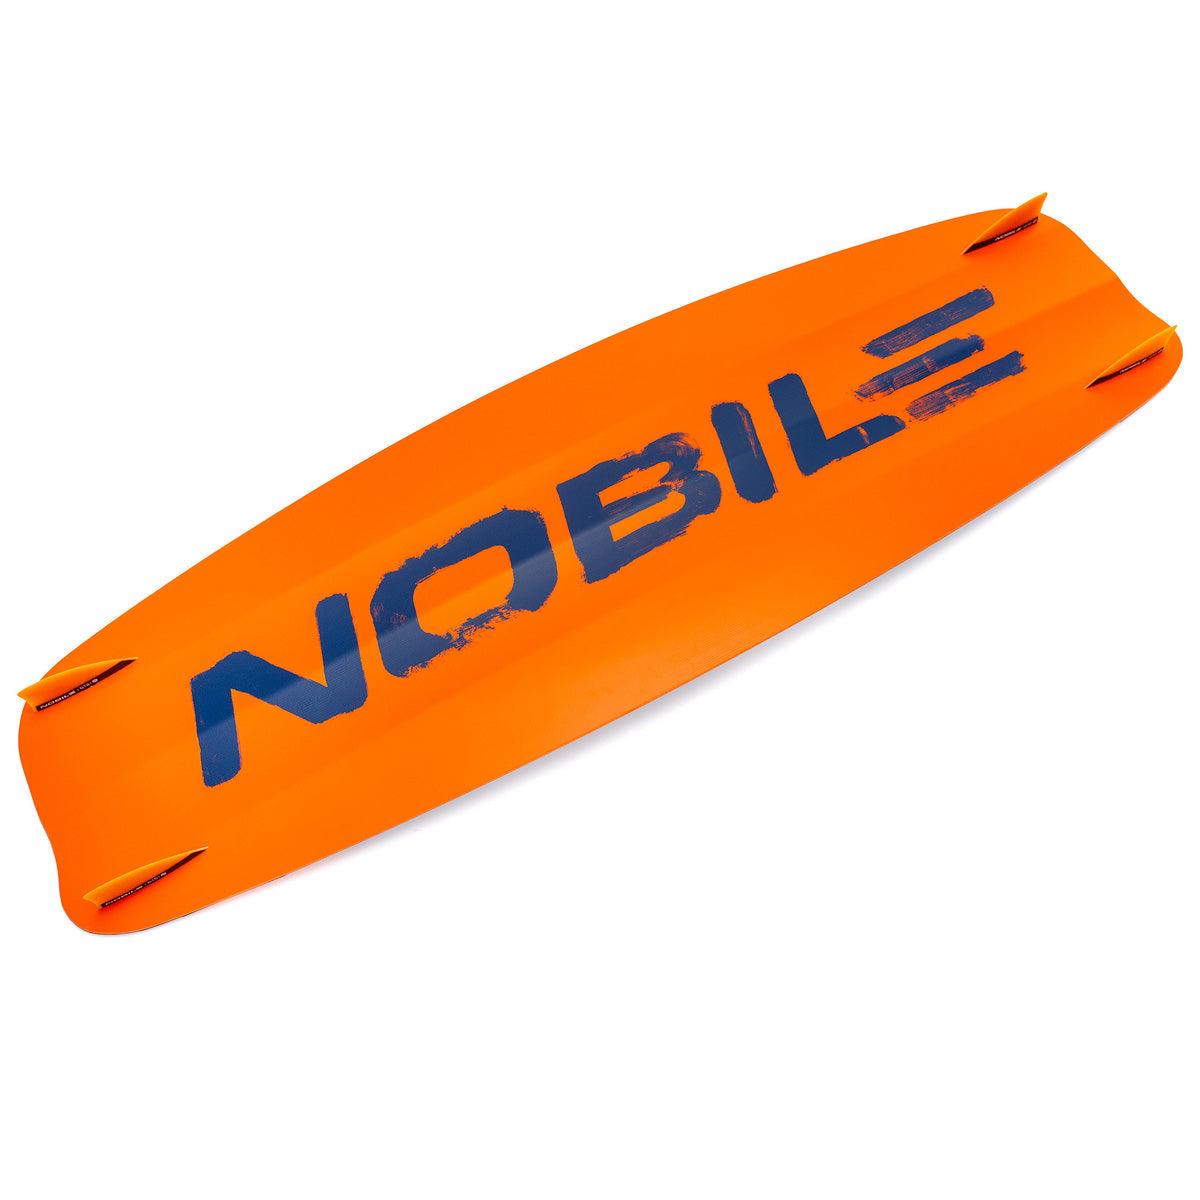 Nobile NHP - Kiteshop.com